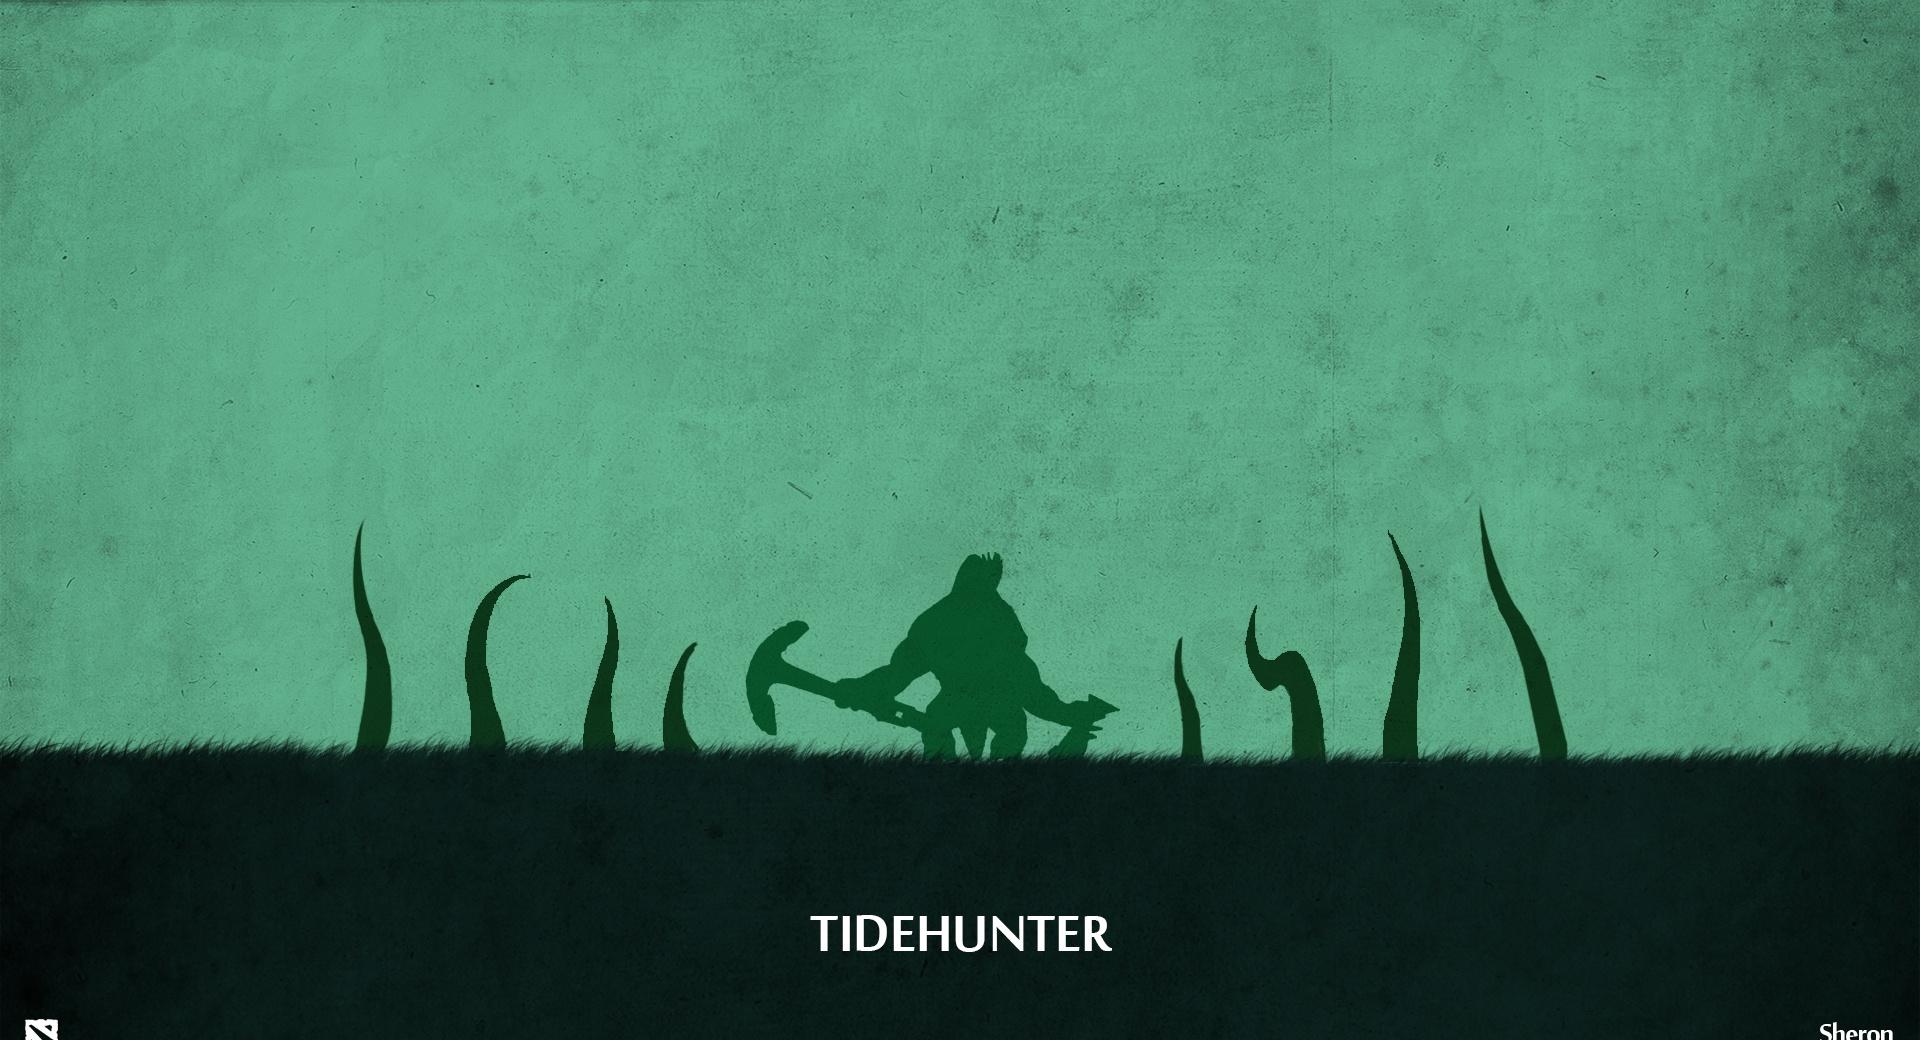 Tidehunter - DotA 2 at 1280 x 960 size wallpapers HD quality